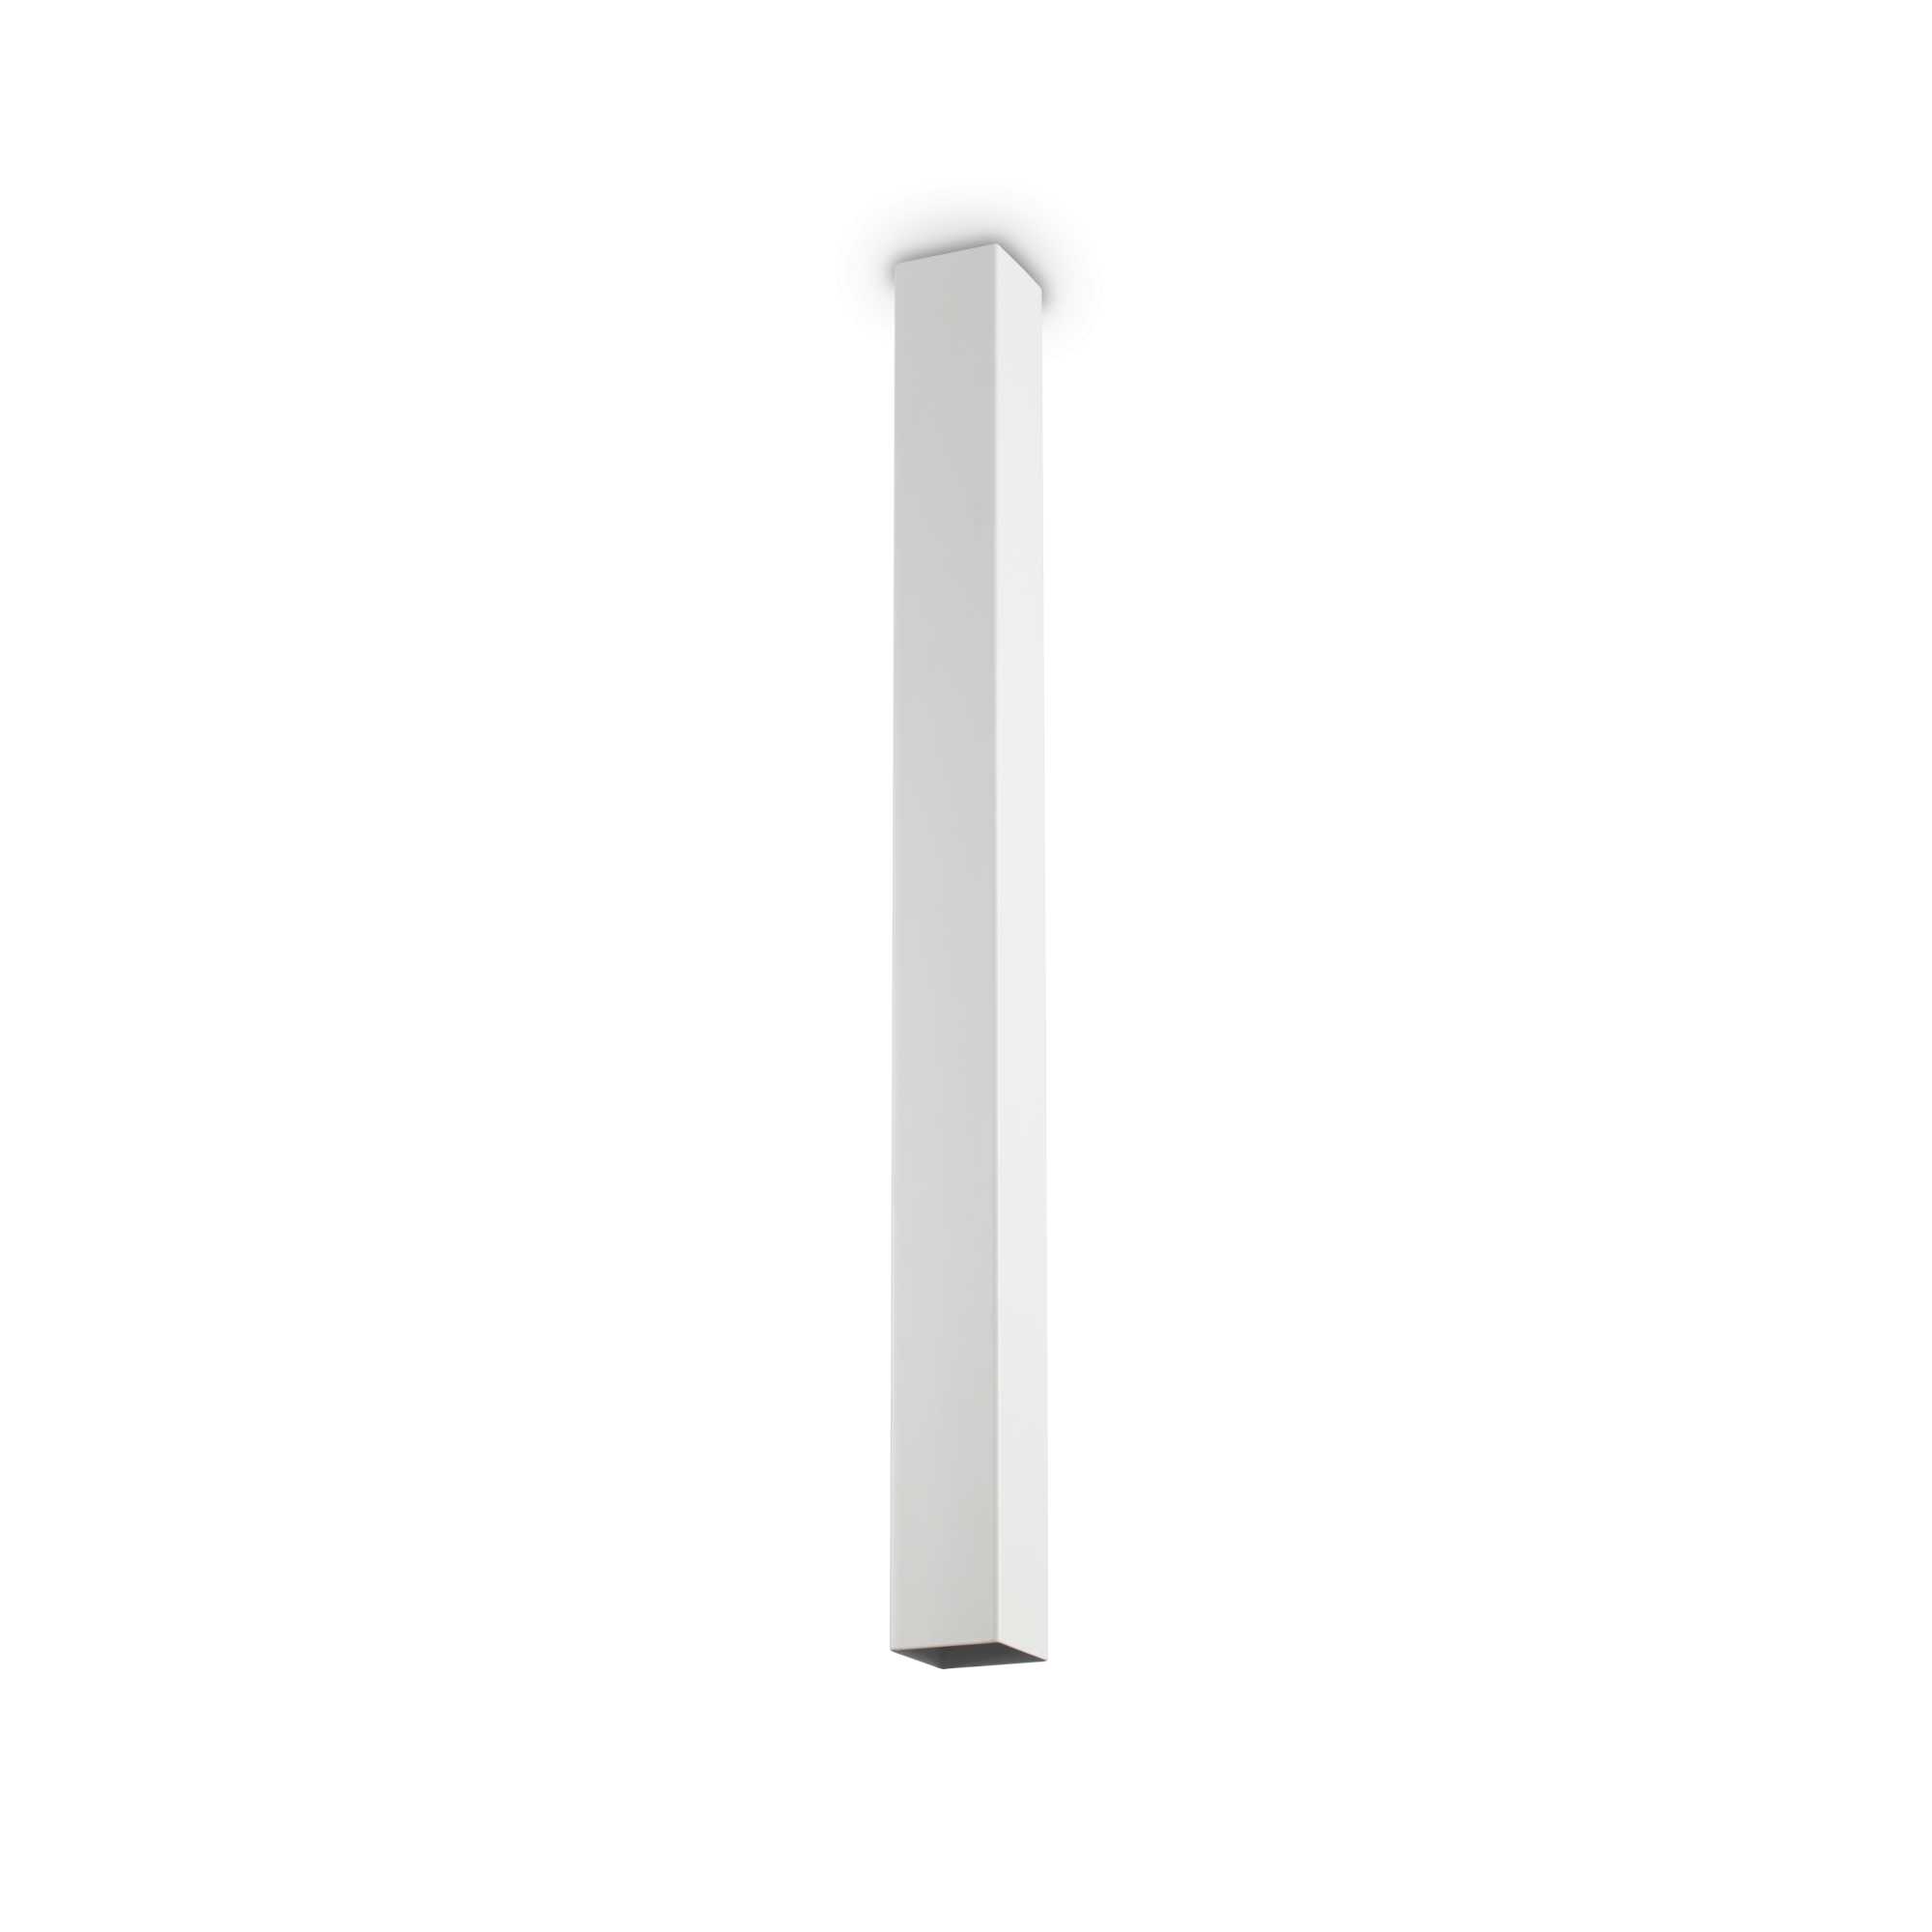 AD hotelska oprema Stropna lampa Sky visina 75 cm - Bijele boje slika proizvoda